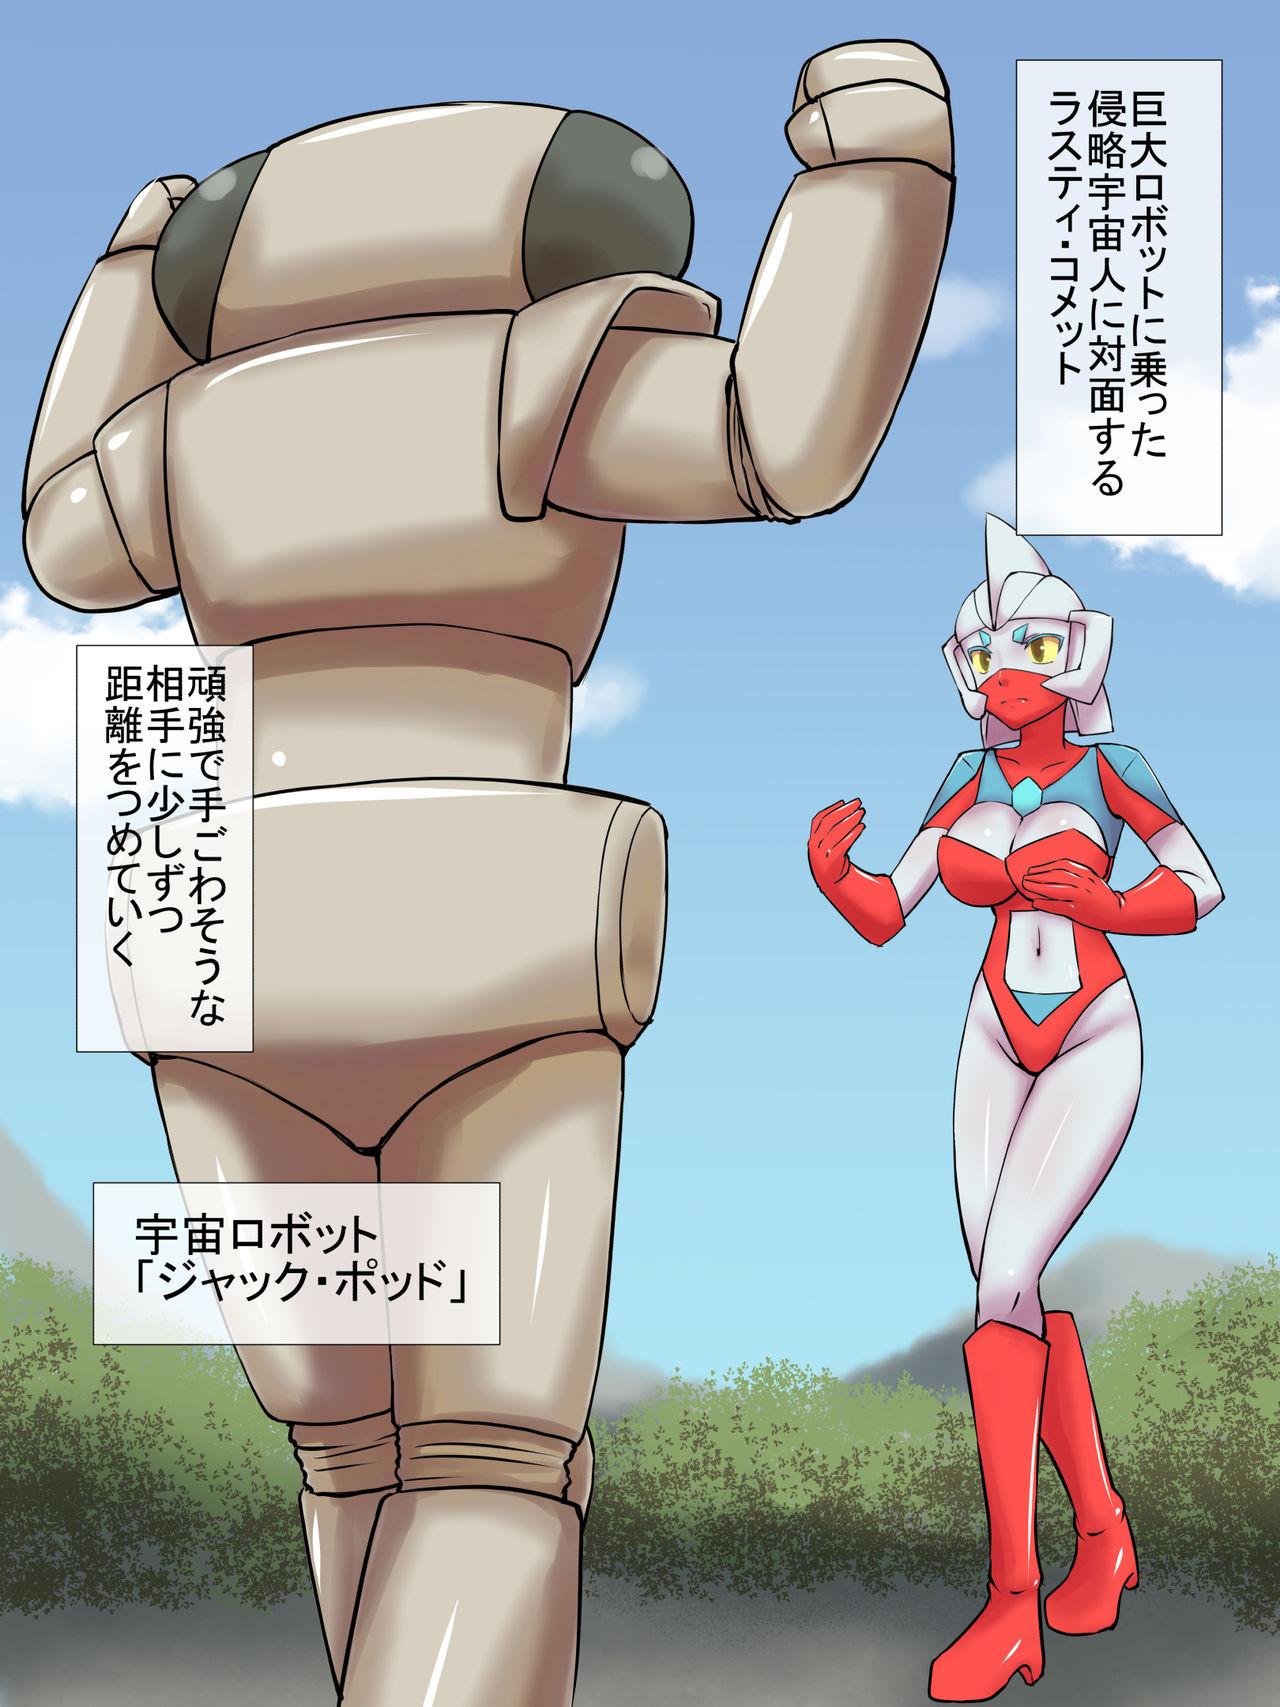 [Elephant Jelly] Tokusatsu Heroine Series - Rusty Comet Ch. 3 - Shinryaku Sareru Heroine (Ultraman) 1